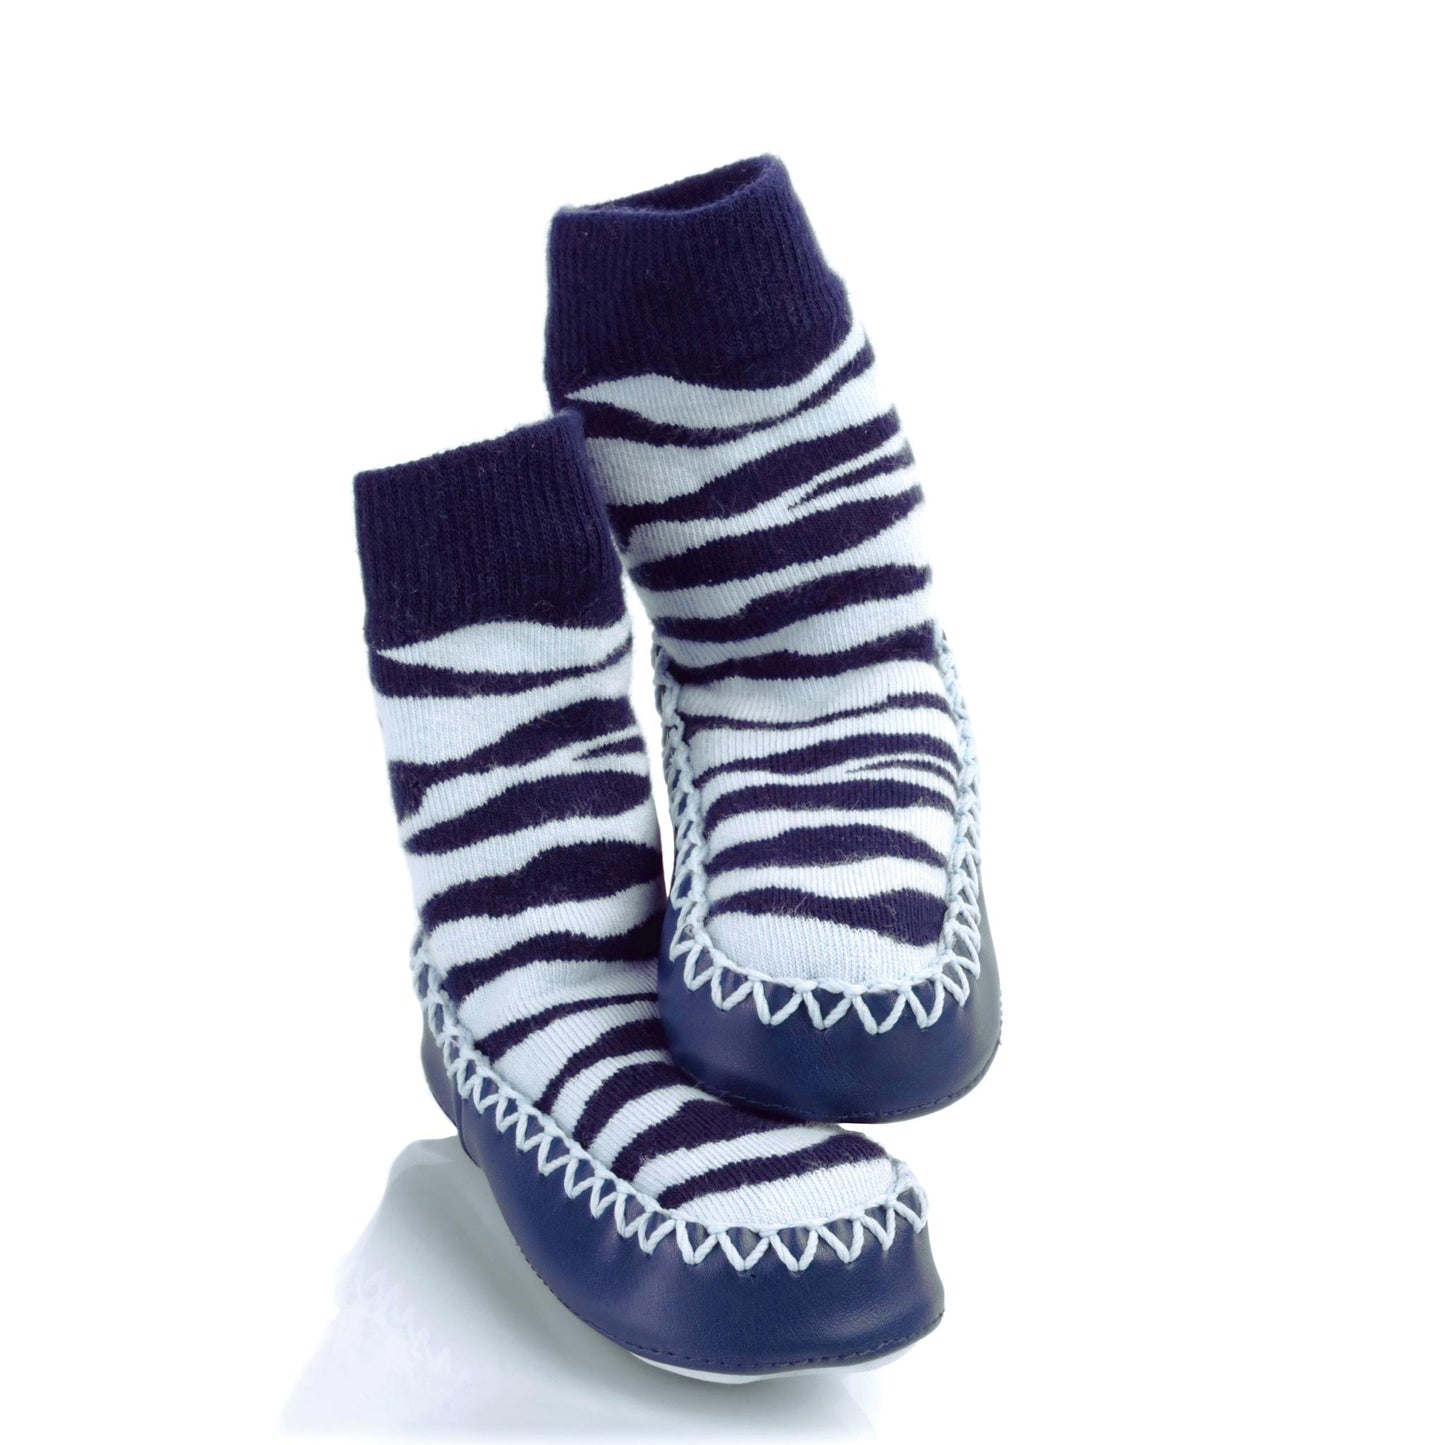 Mocc Ons Slipper Socks (Zebra Stripe)